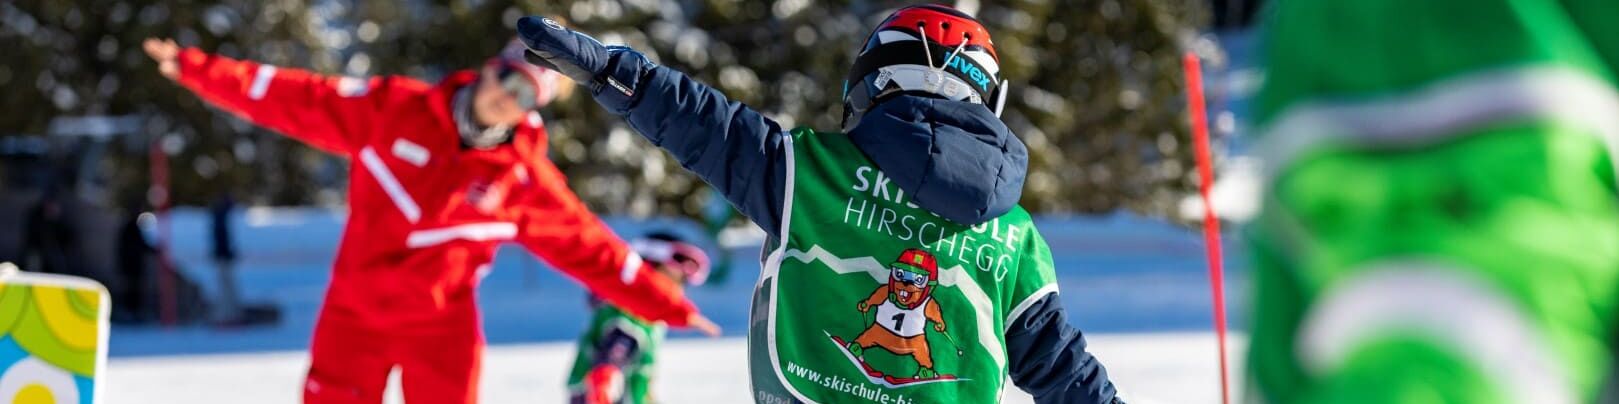 Ski instructor practises skiing with child in Kinderland Hirschegg